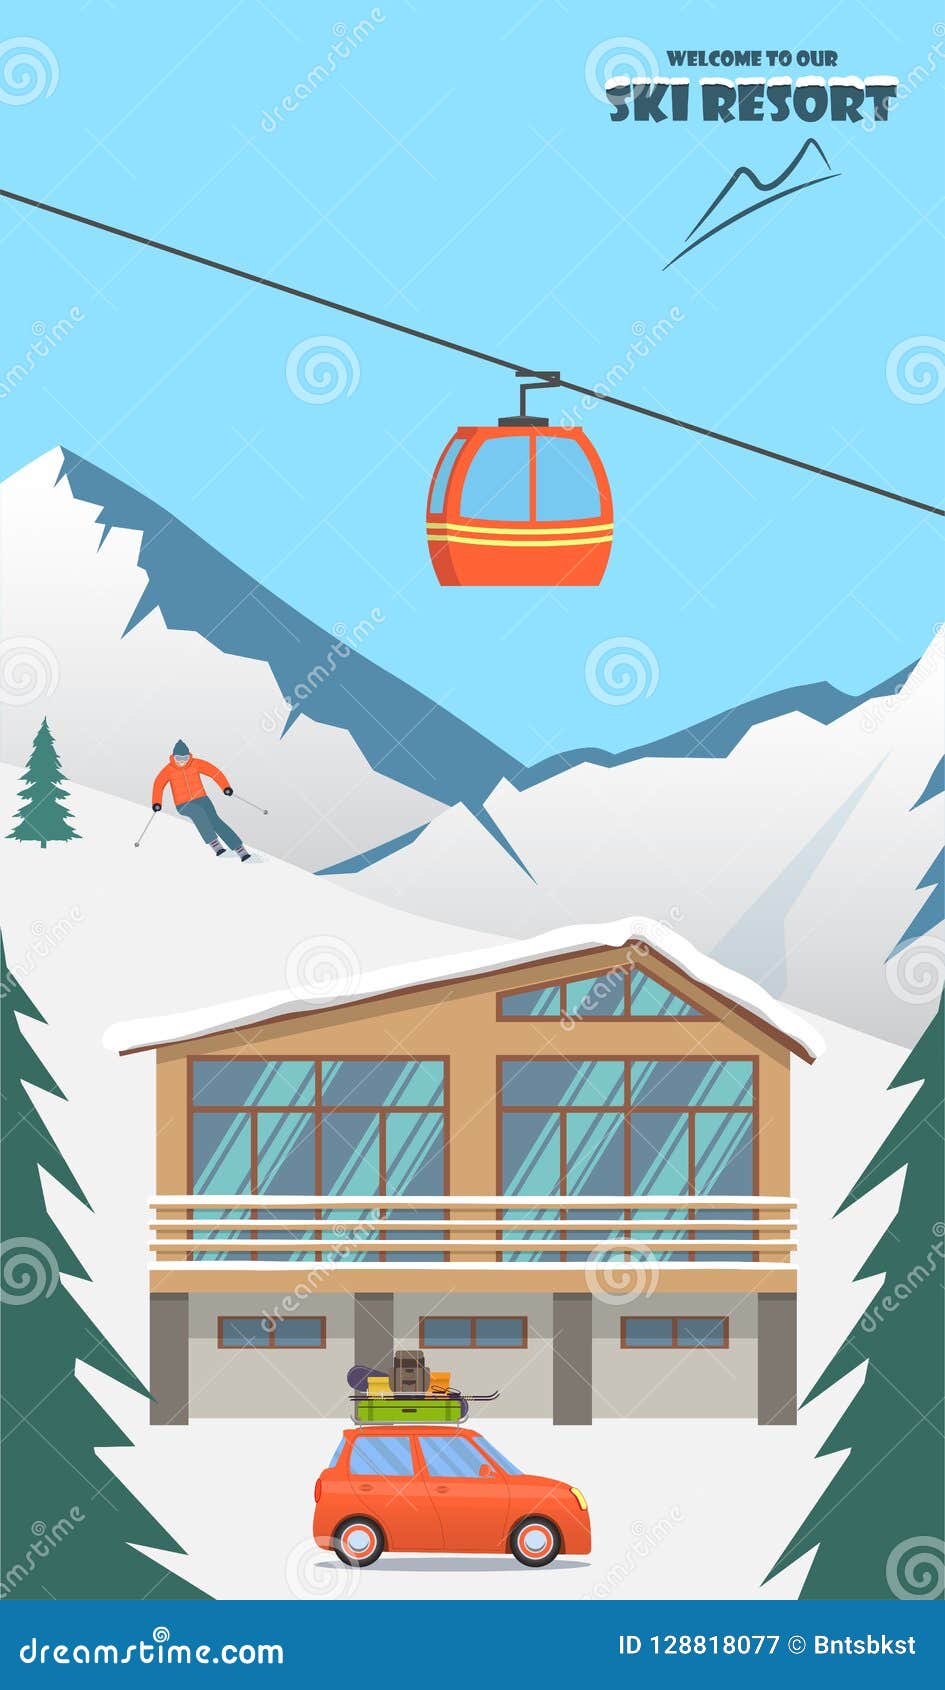 Ski Resort. Winter Mountain Landscape with Lodge, Ski Lift, Skier ...